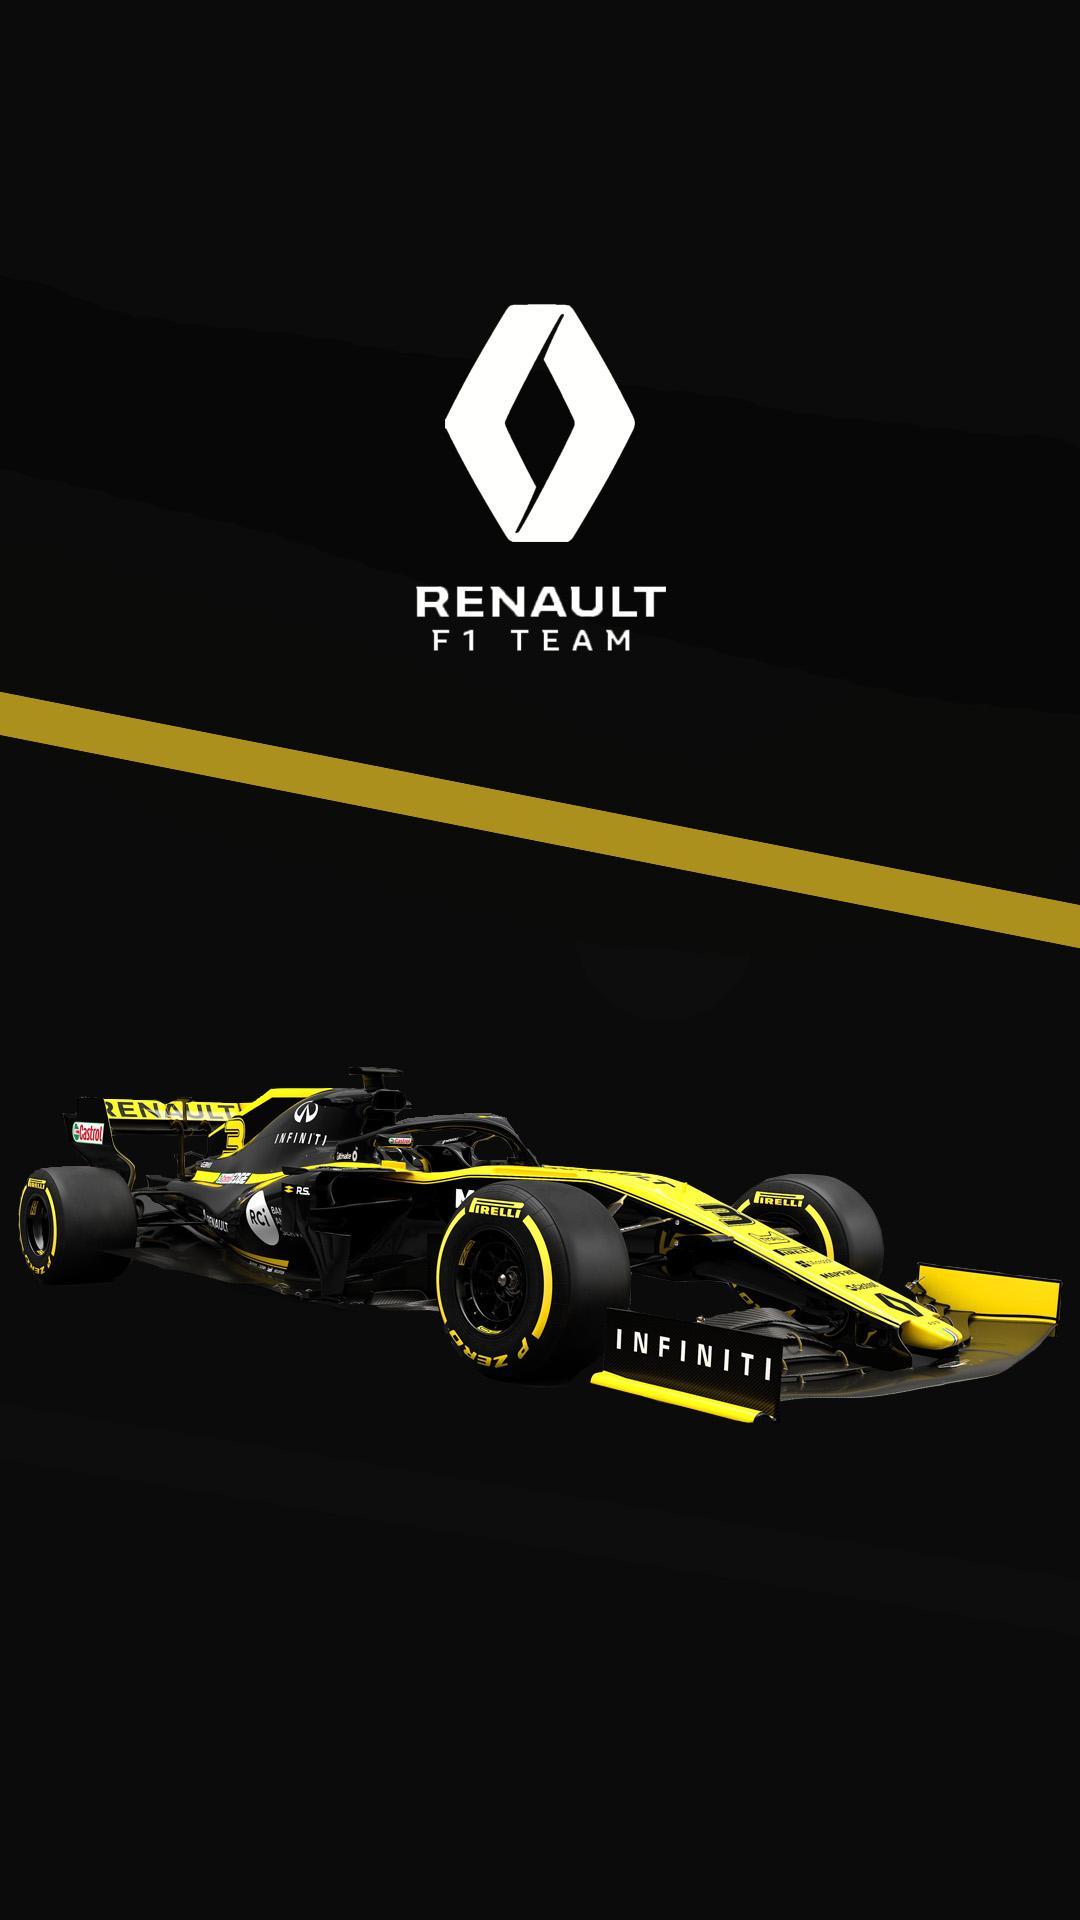 Renault 2019 phone wallpaper I made